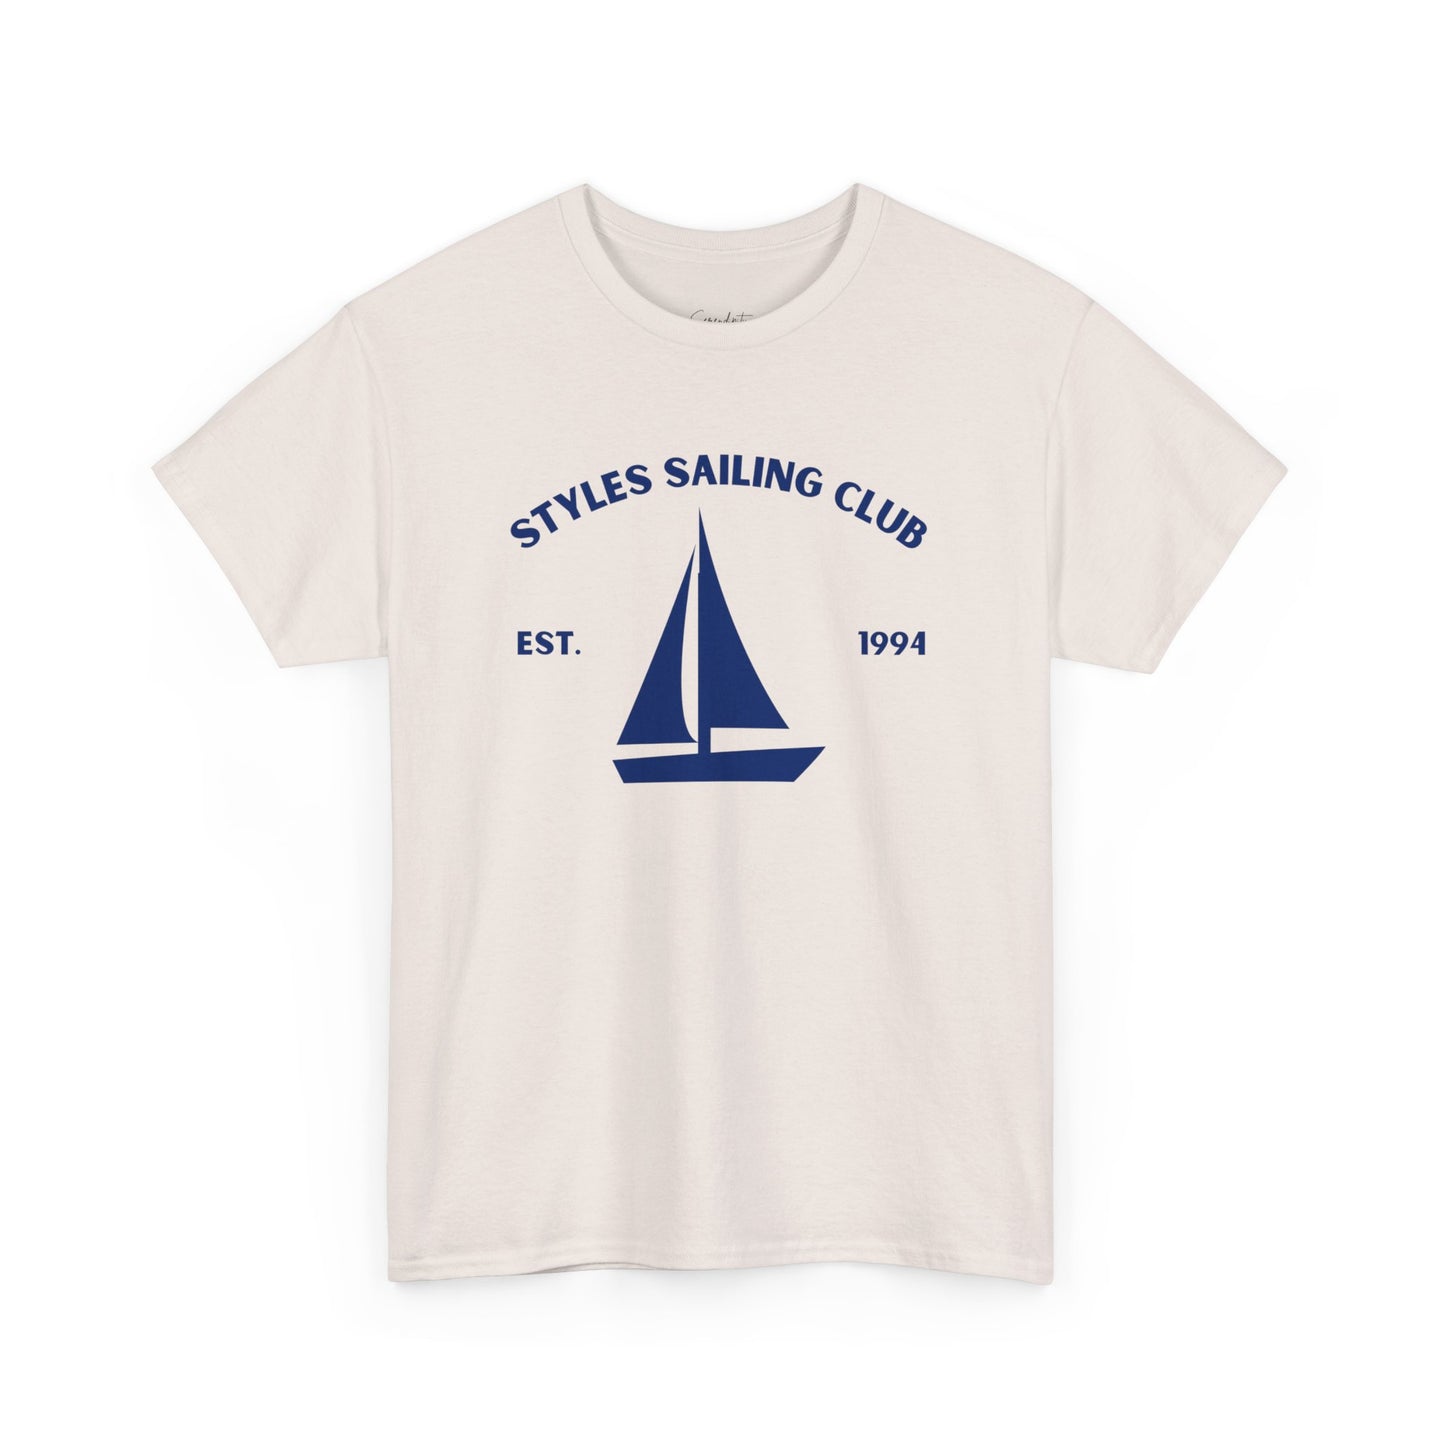 Styles Sailing Club Unisex Tee